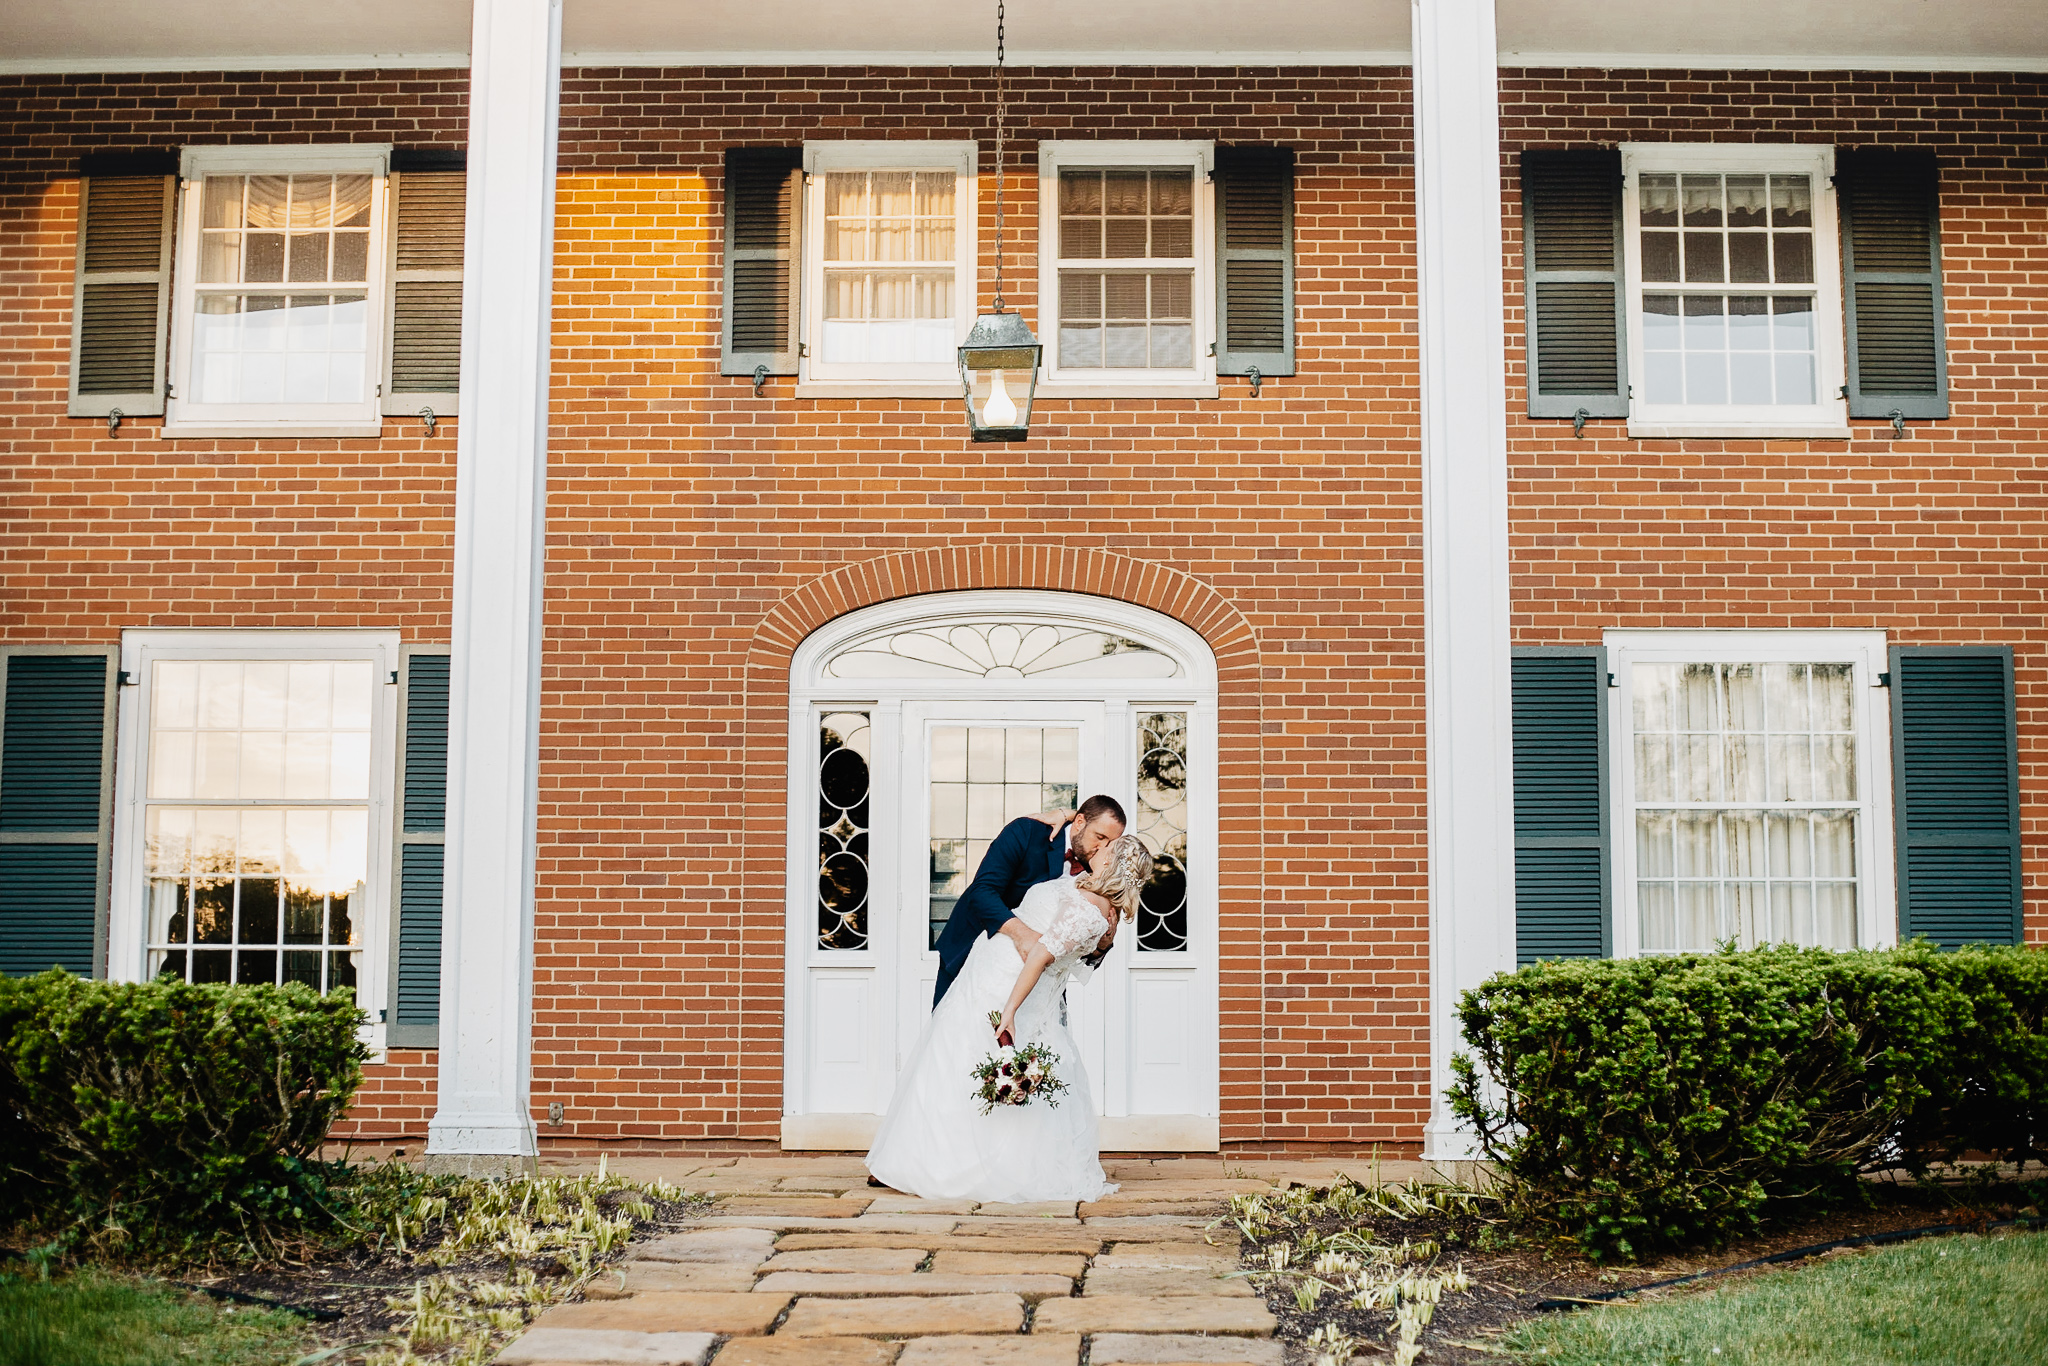 Hannah + Mike | Chianti and Navy Columbus Wedding at Little Brooke Meadow | Catherine Milliron Photography | Ohio Wedding + Engagement Photographer